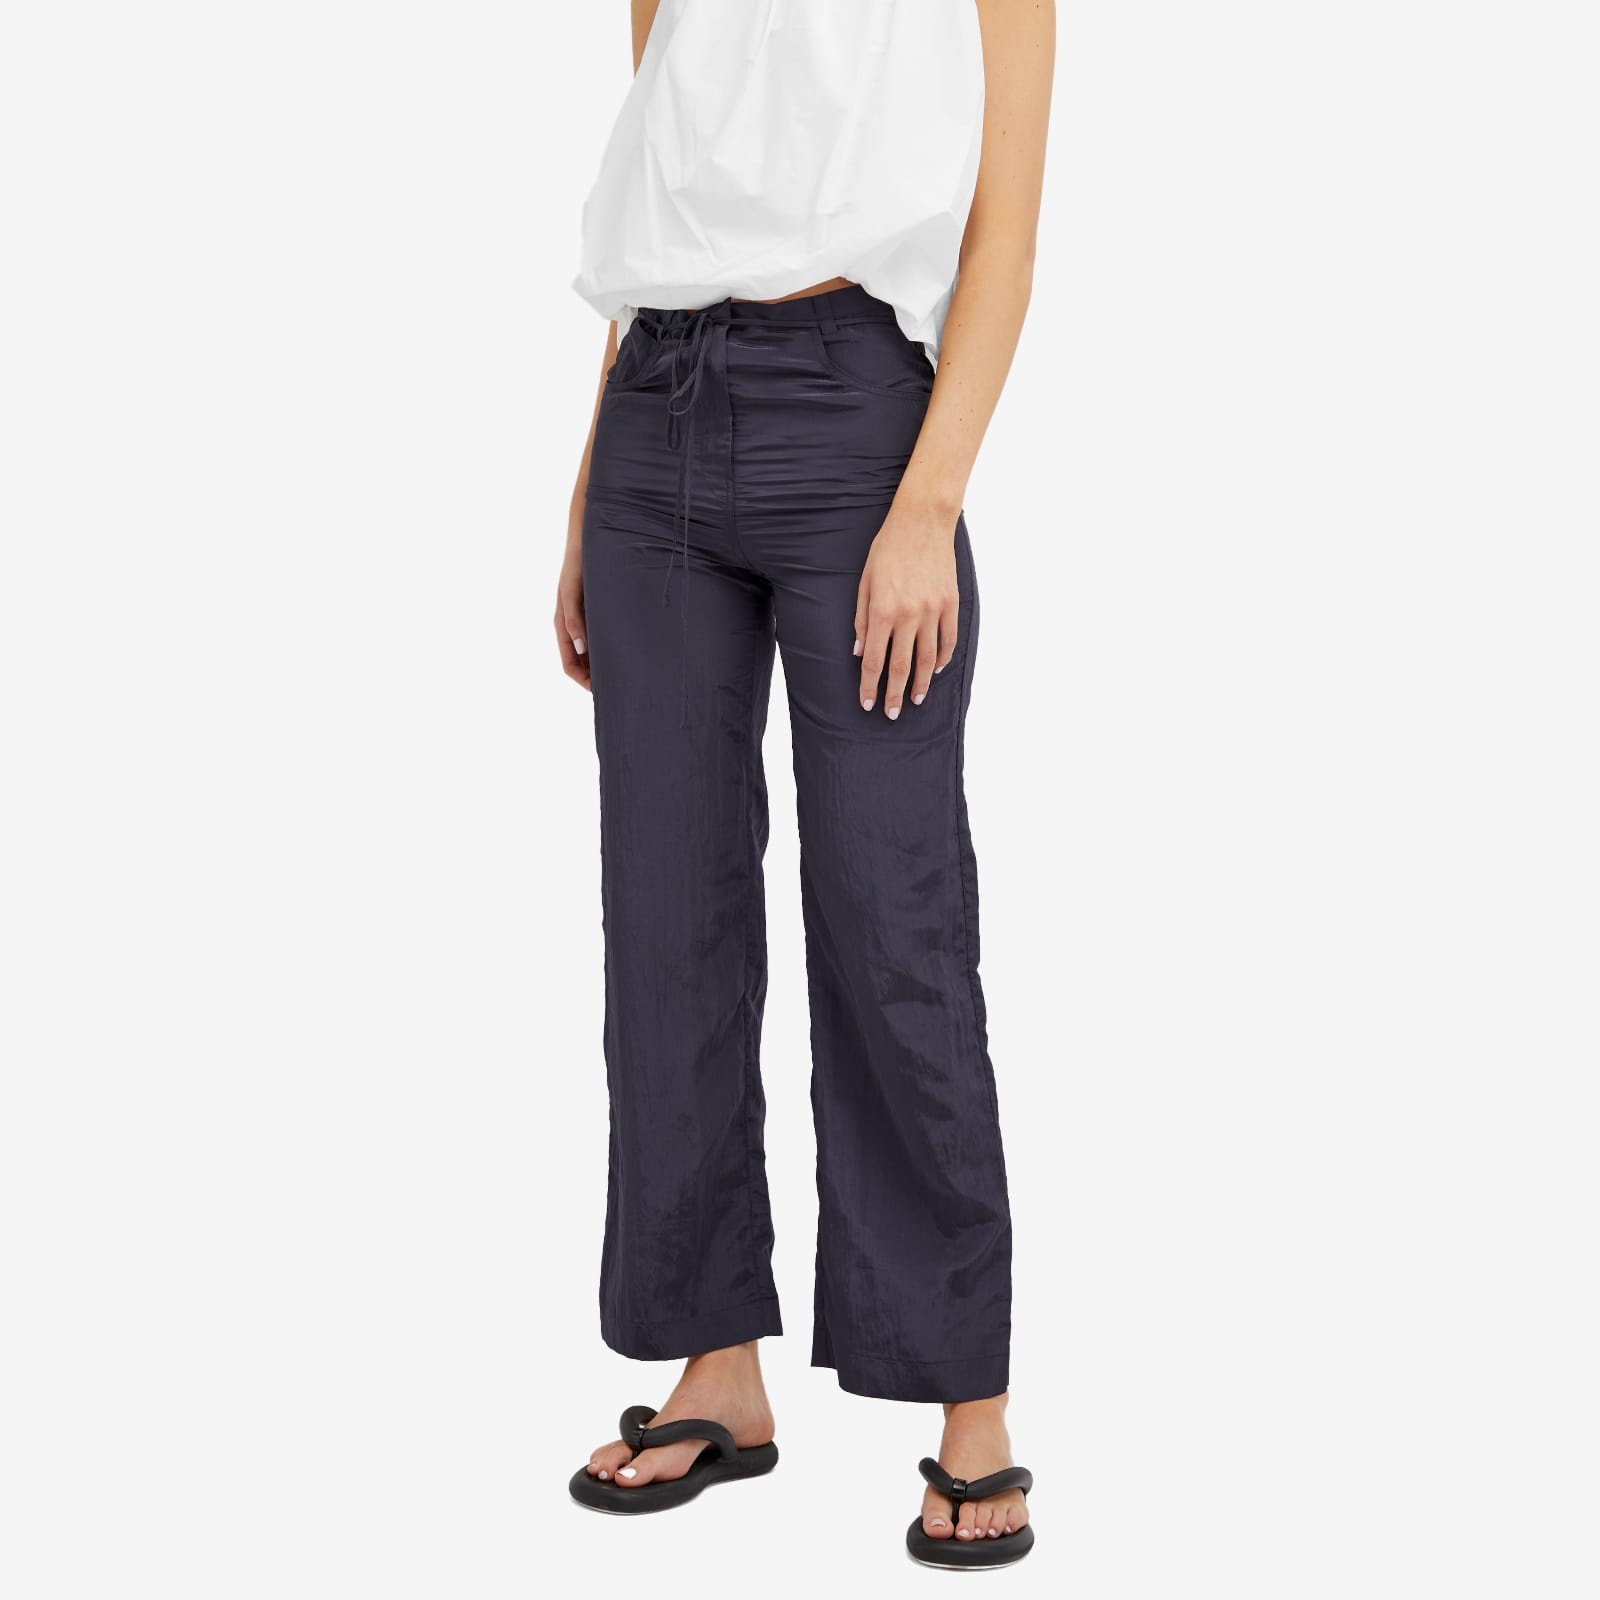 Low Classic Crinkle Slim Fit Pants - 2